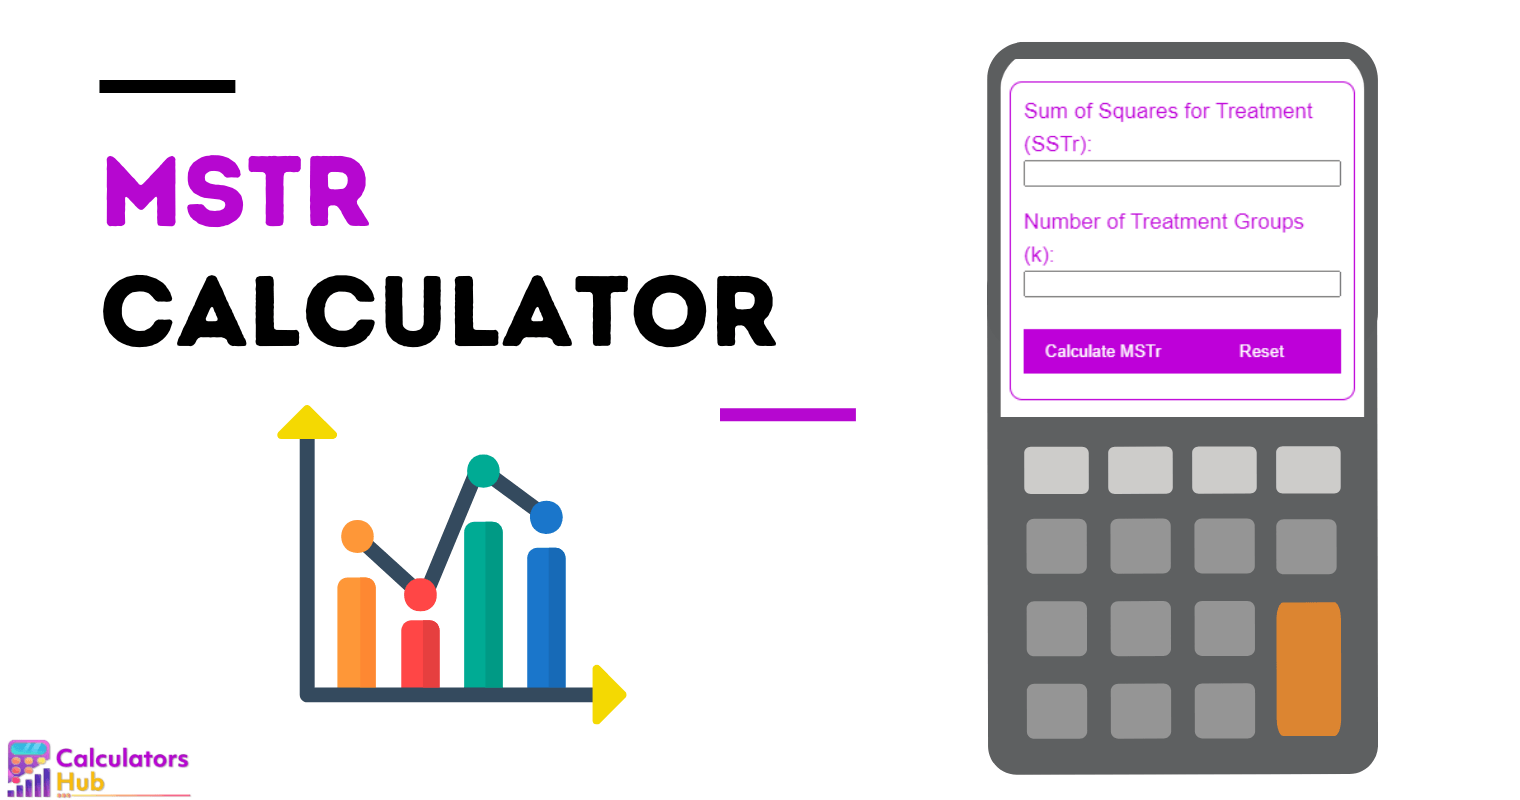 MSTr Calculator